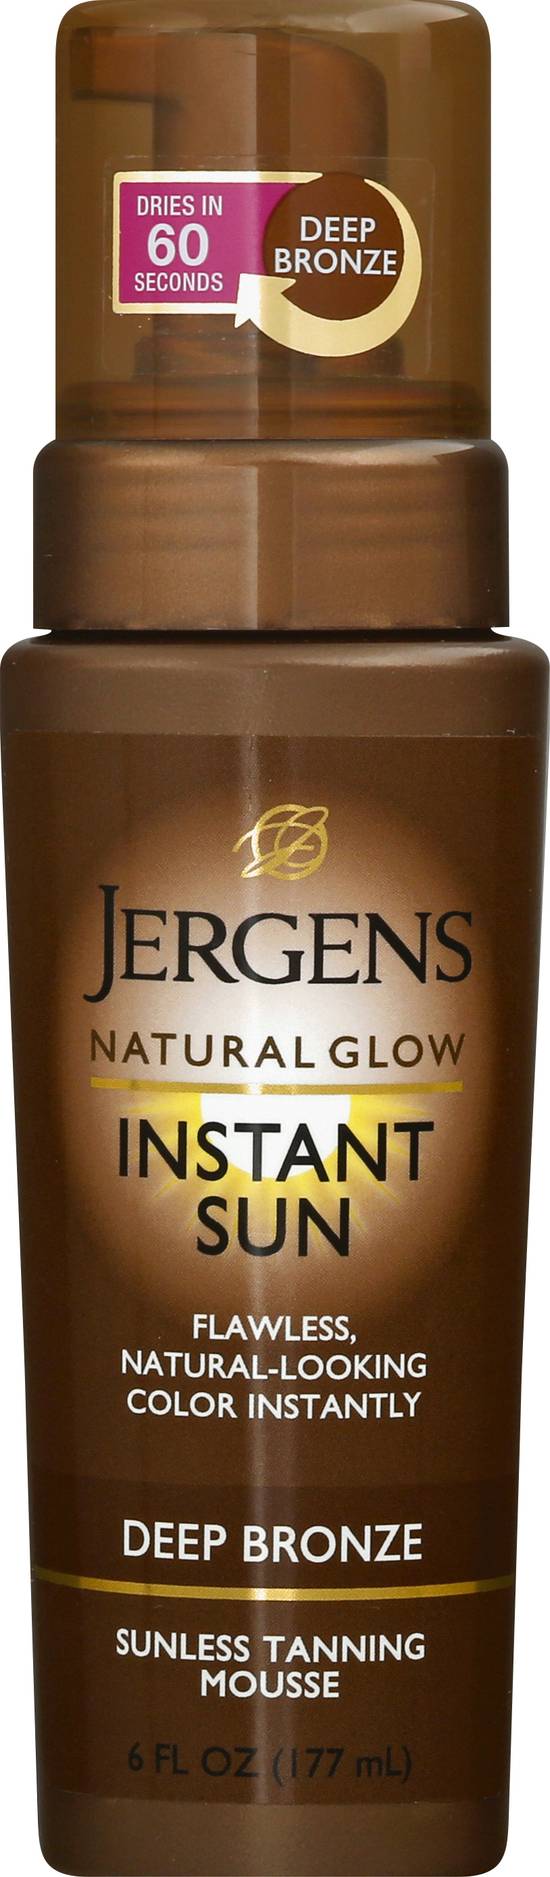 Jergens Natural Glow Instant Sun Deep Bronze Tanning Mousse